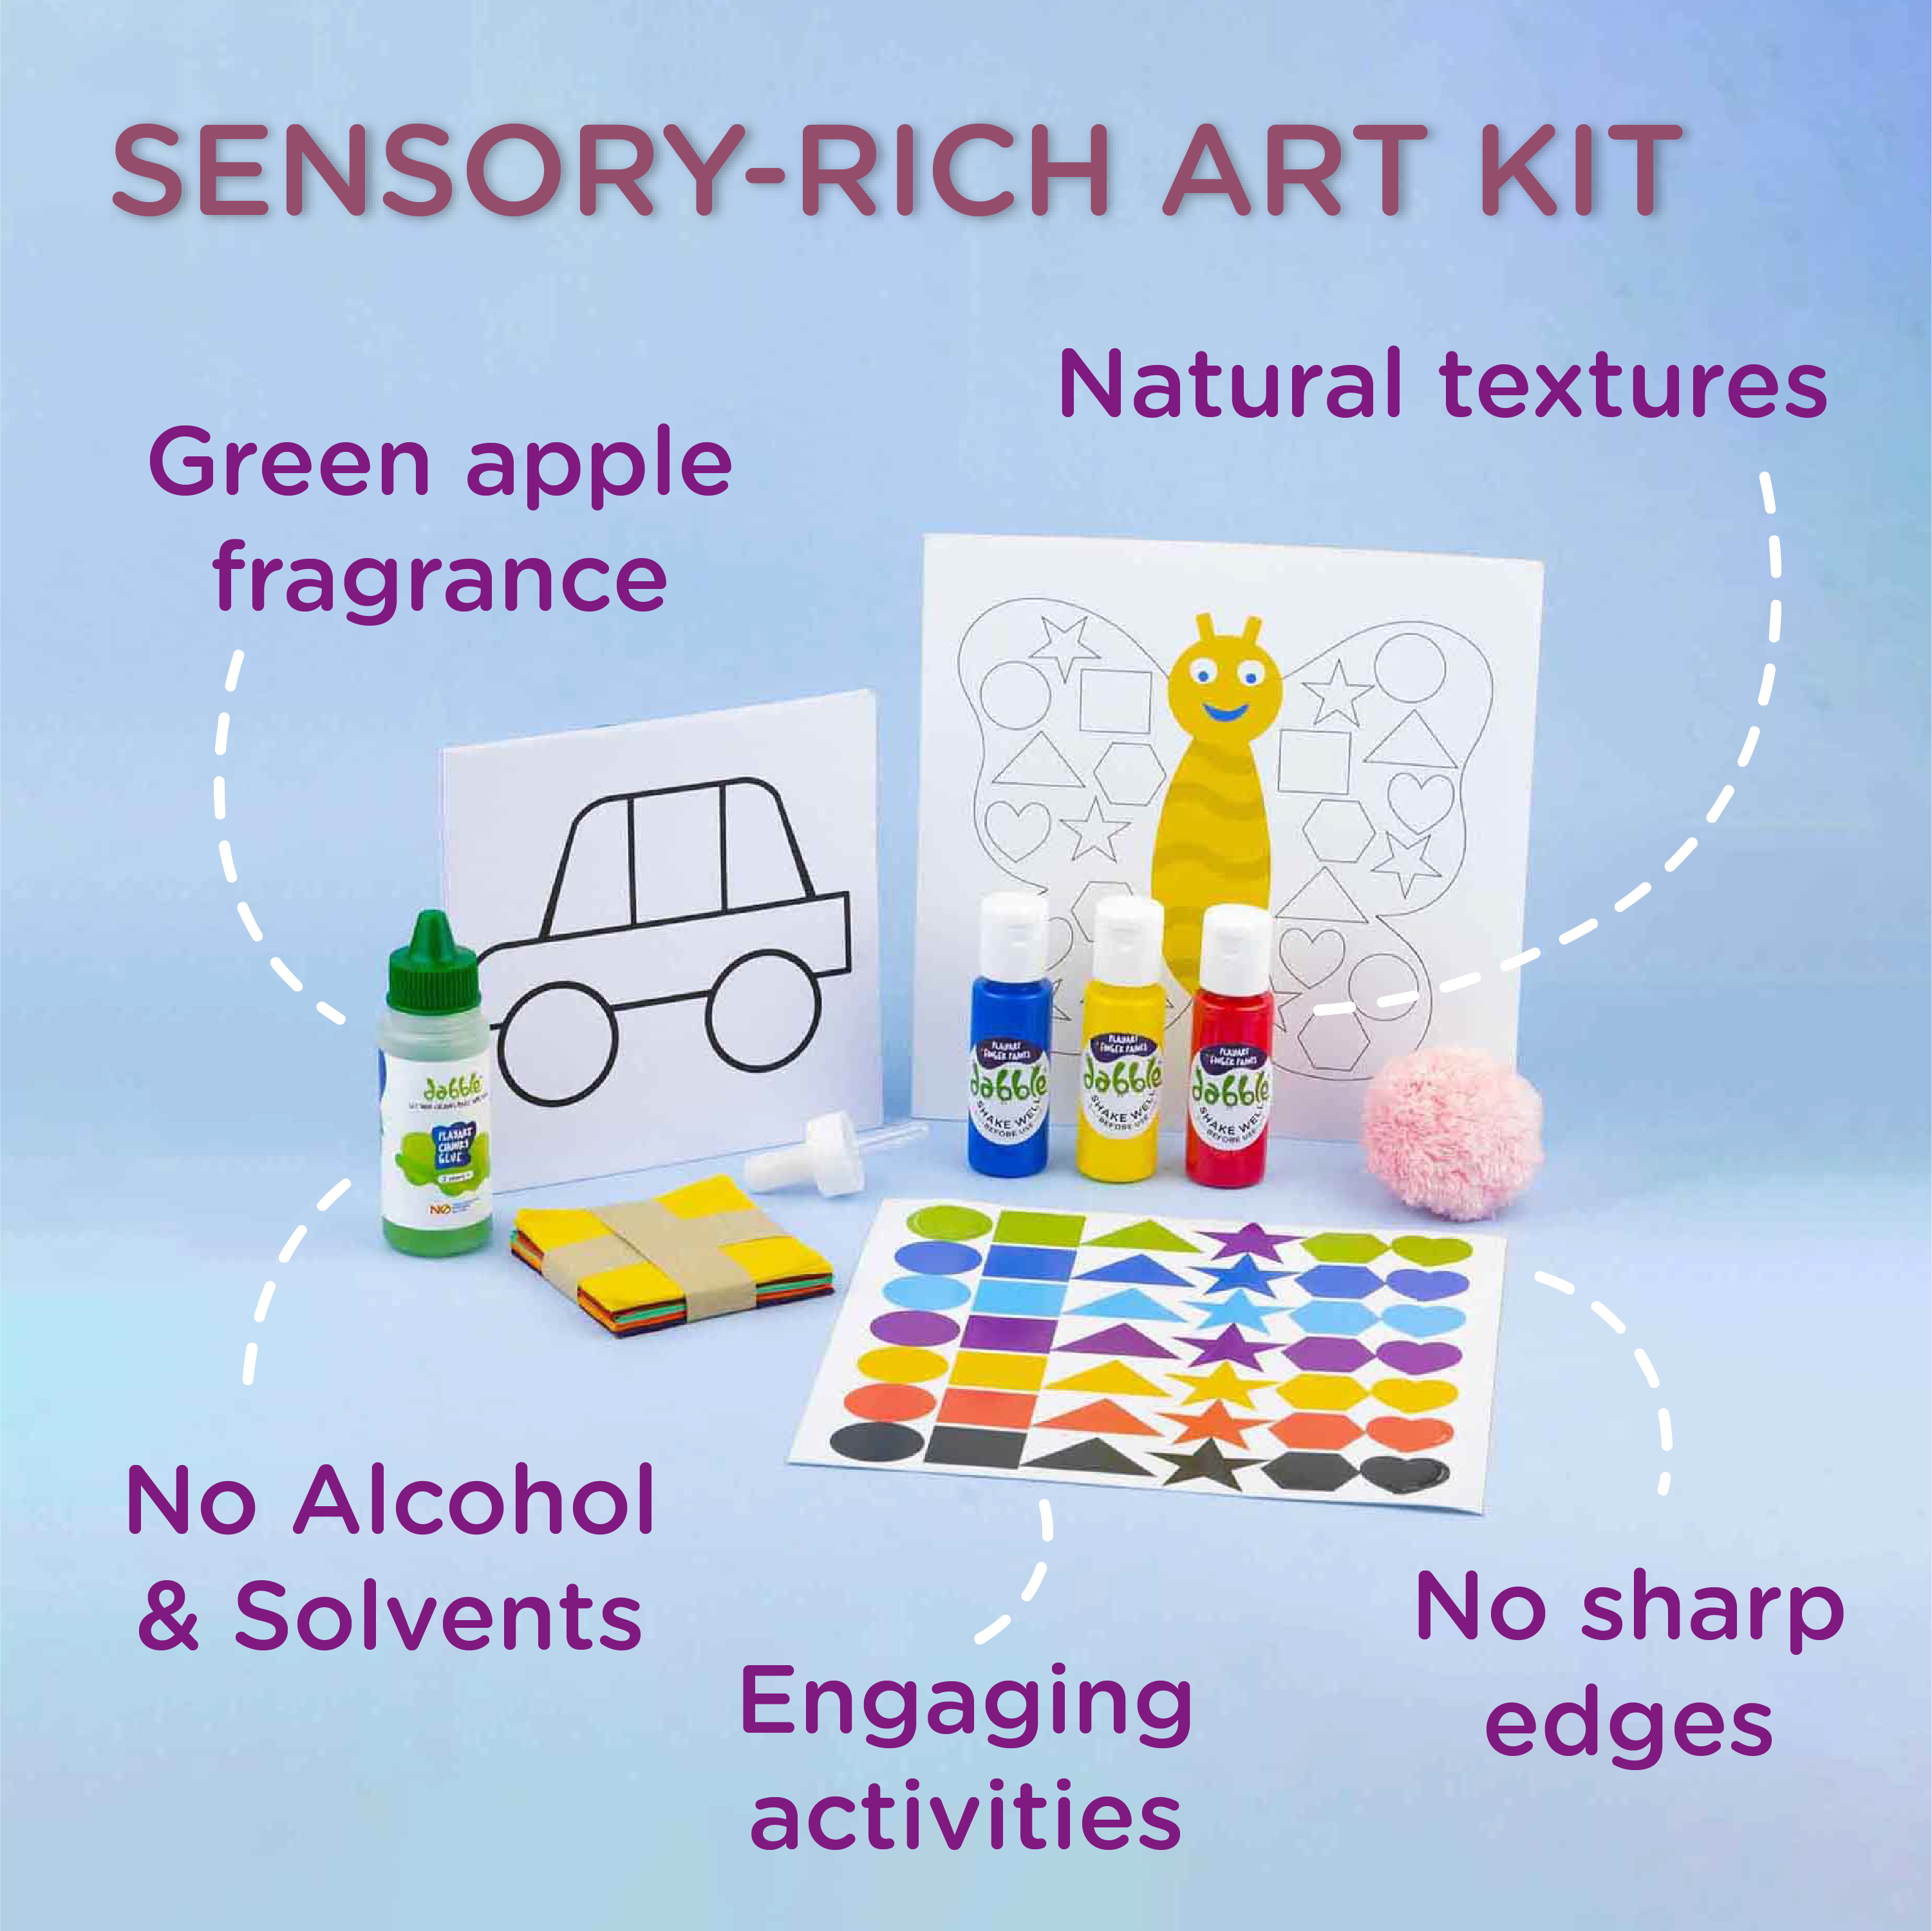 Sensory rich-art kit for preschoolers